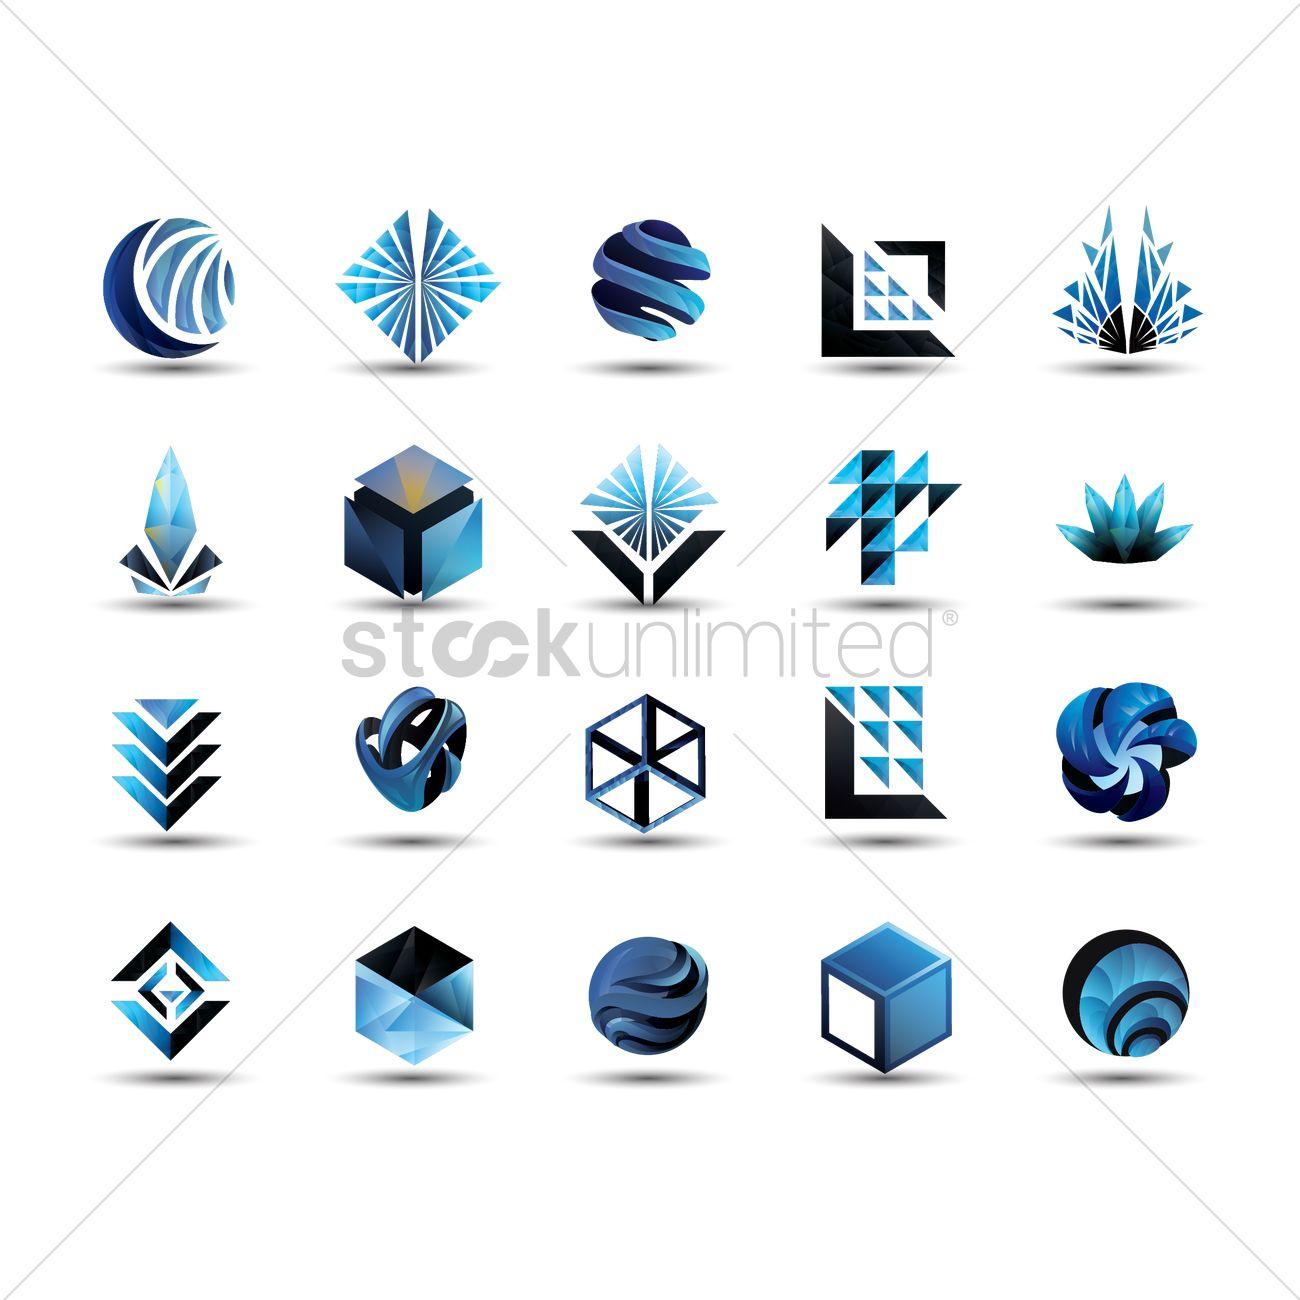 Abstract Logo - Set of abstract logos Vector Image - 1610807 | StockUnlimited